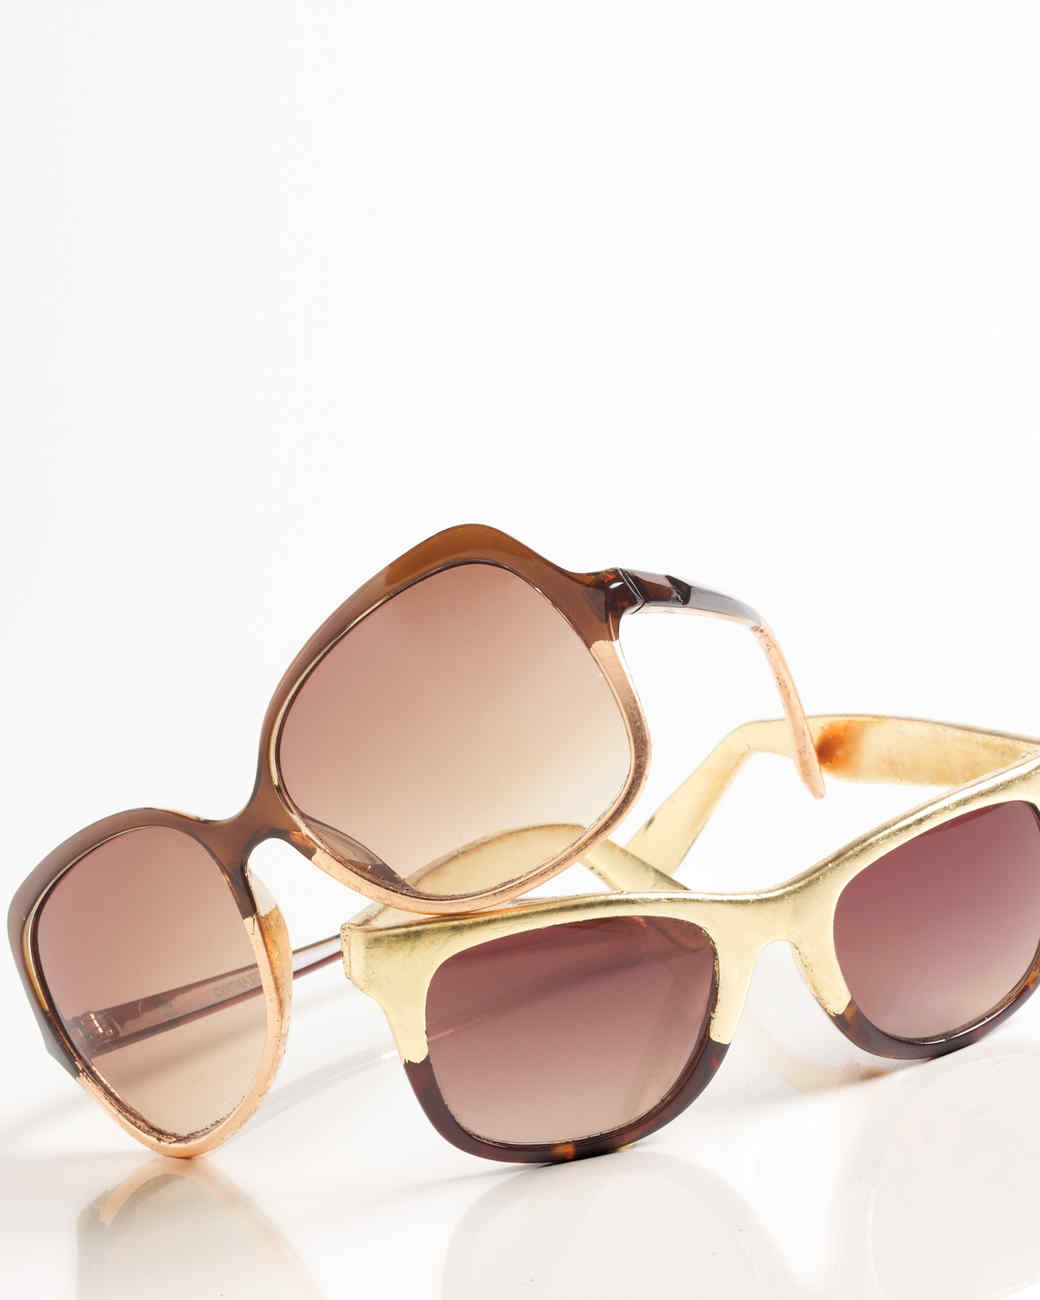 mscrafts-holiday14-fashionista-sunglasses-1014.jpg